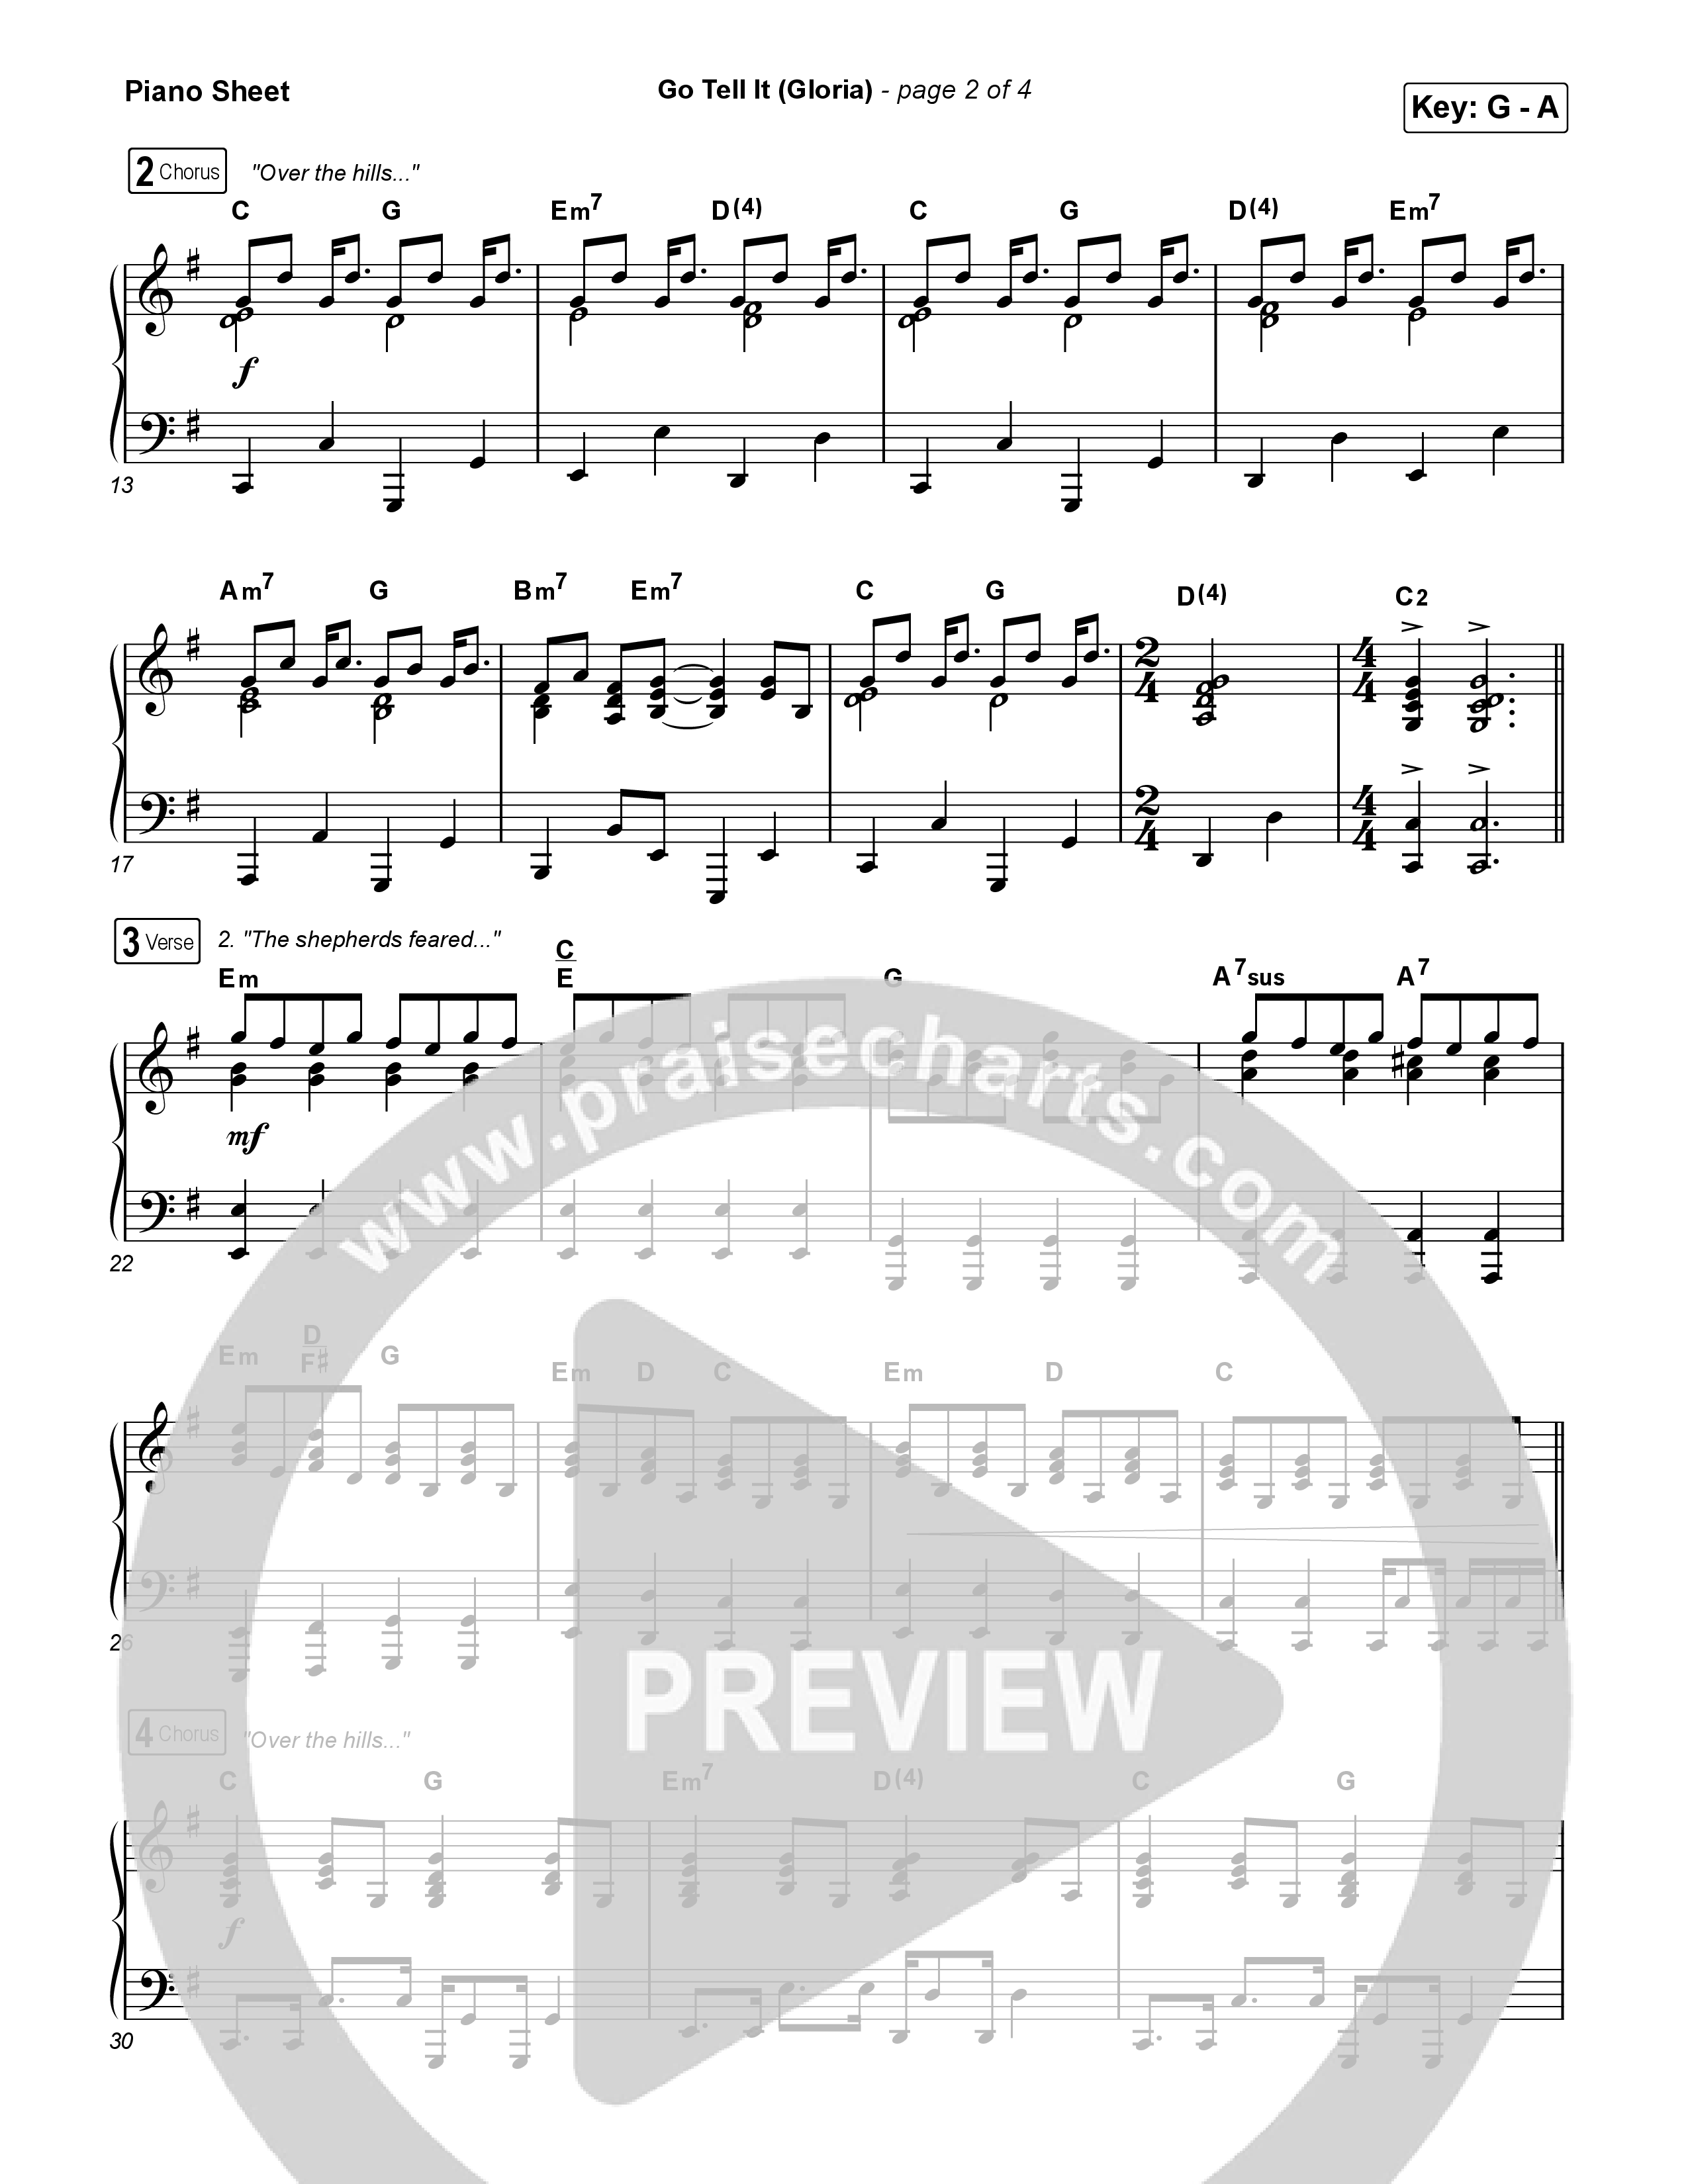 Go Tell It (Gloria) (Choral Anthem SATB) Piano Sheet (Matt Maher / Arr. Luke Gambill)